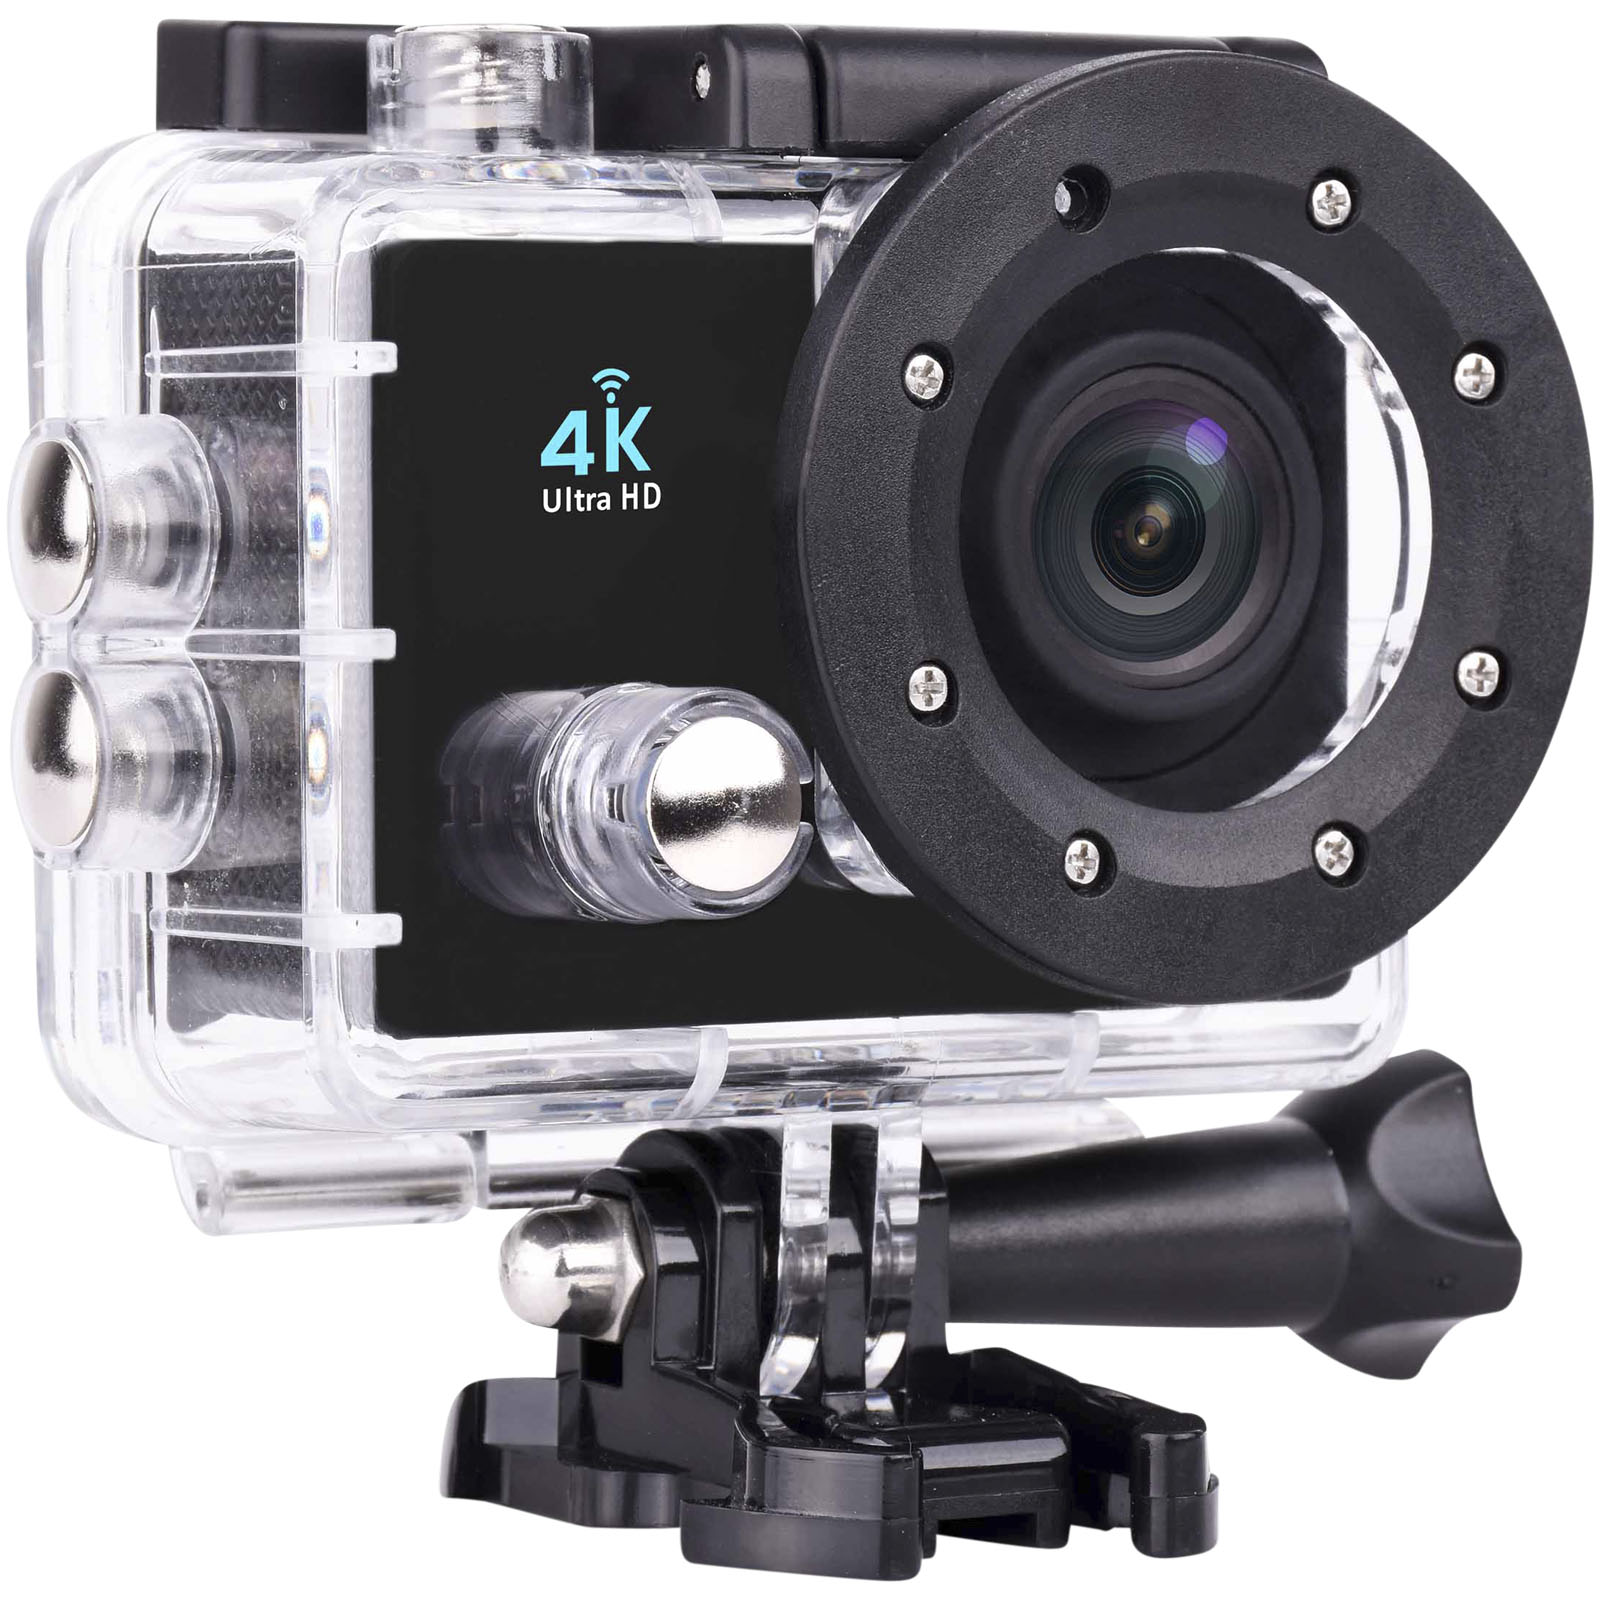 Caméra d'action 4K - Le Pontet - Zaprinta France